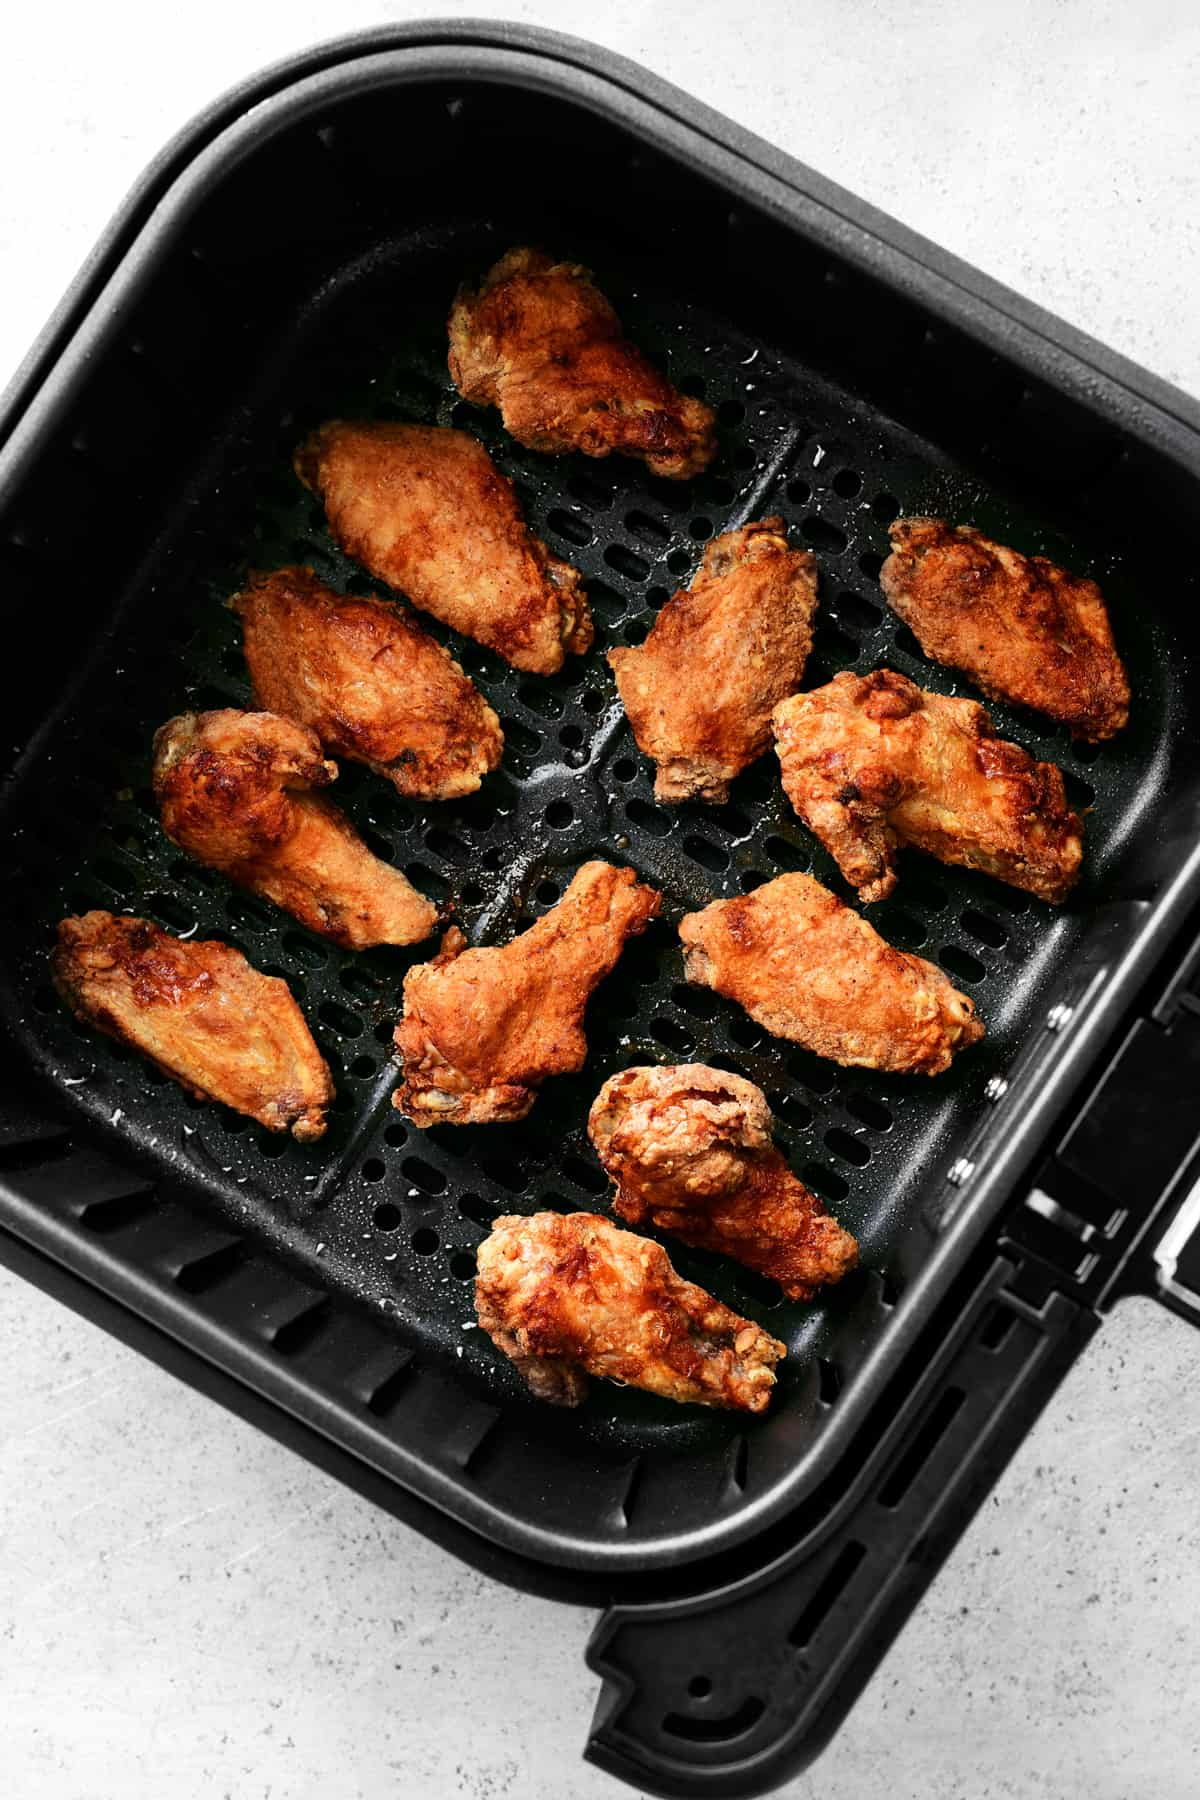 fried chicken wings in the air fryer basket